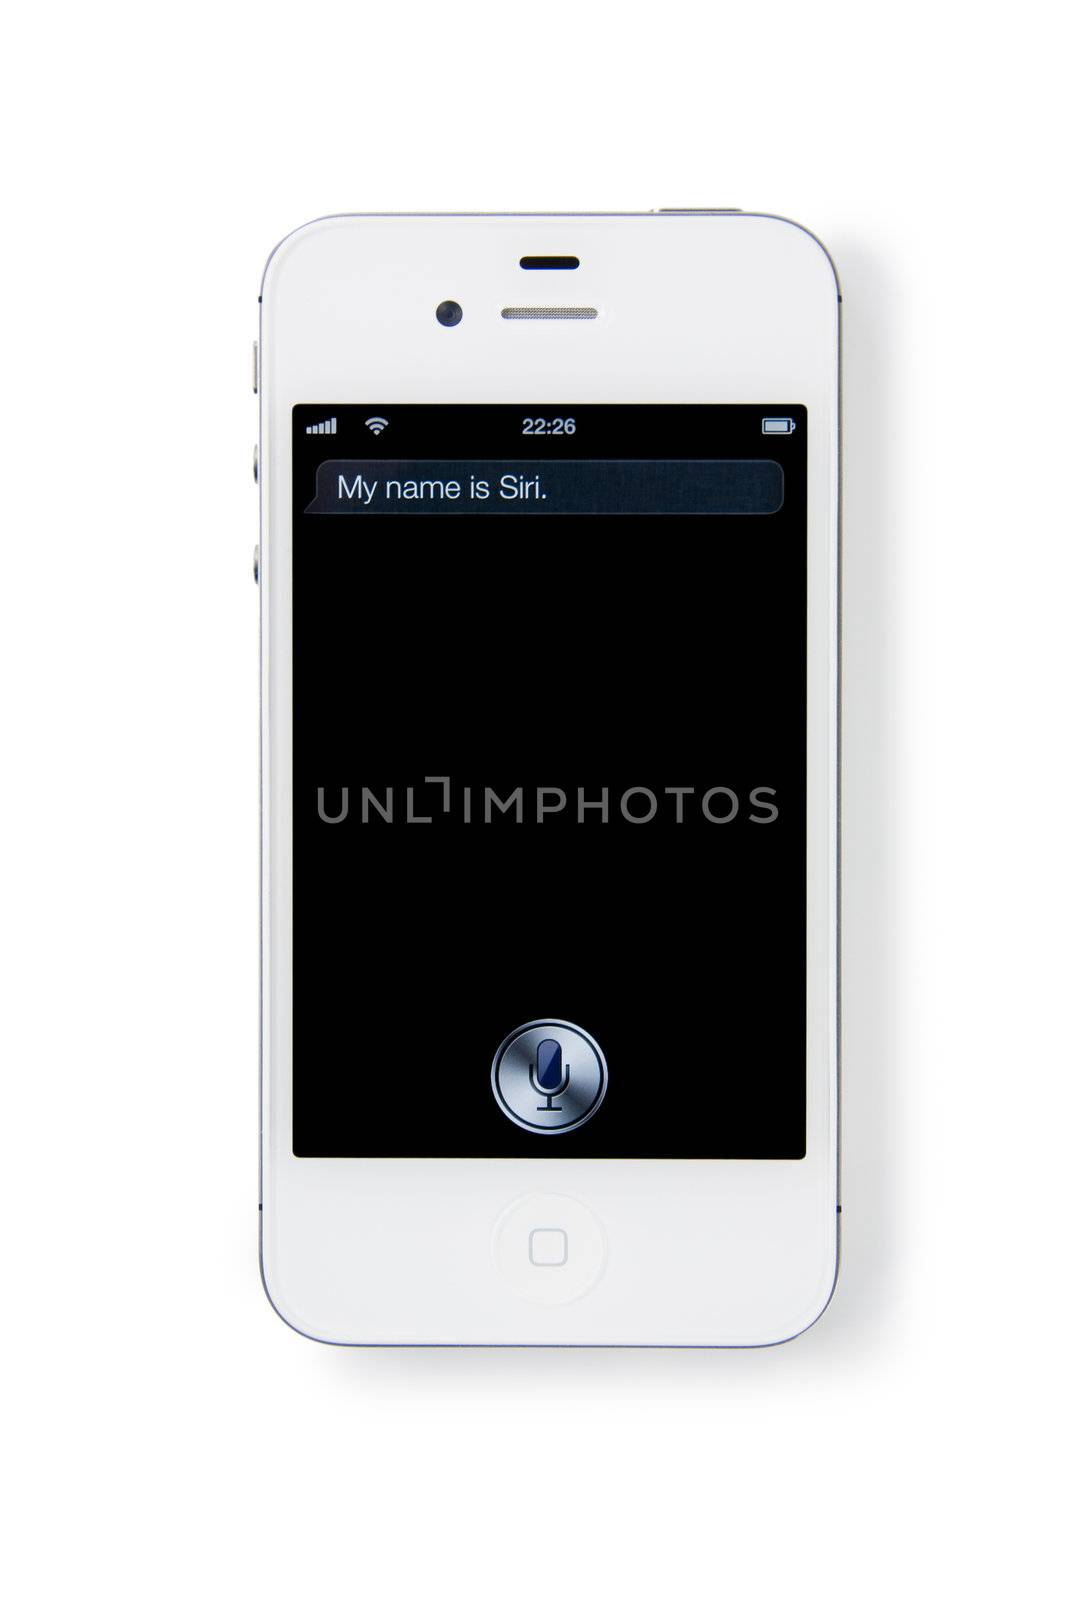 Using SIRI on a white iPhone 4S